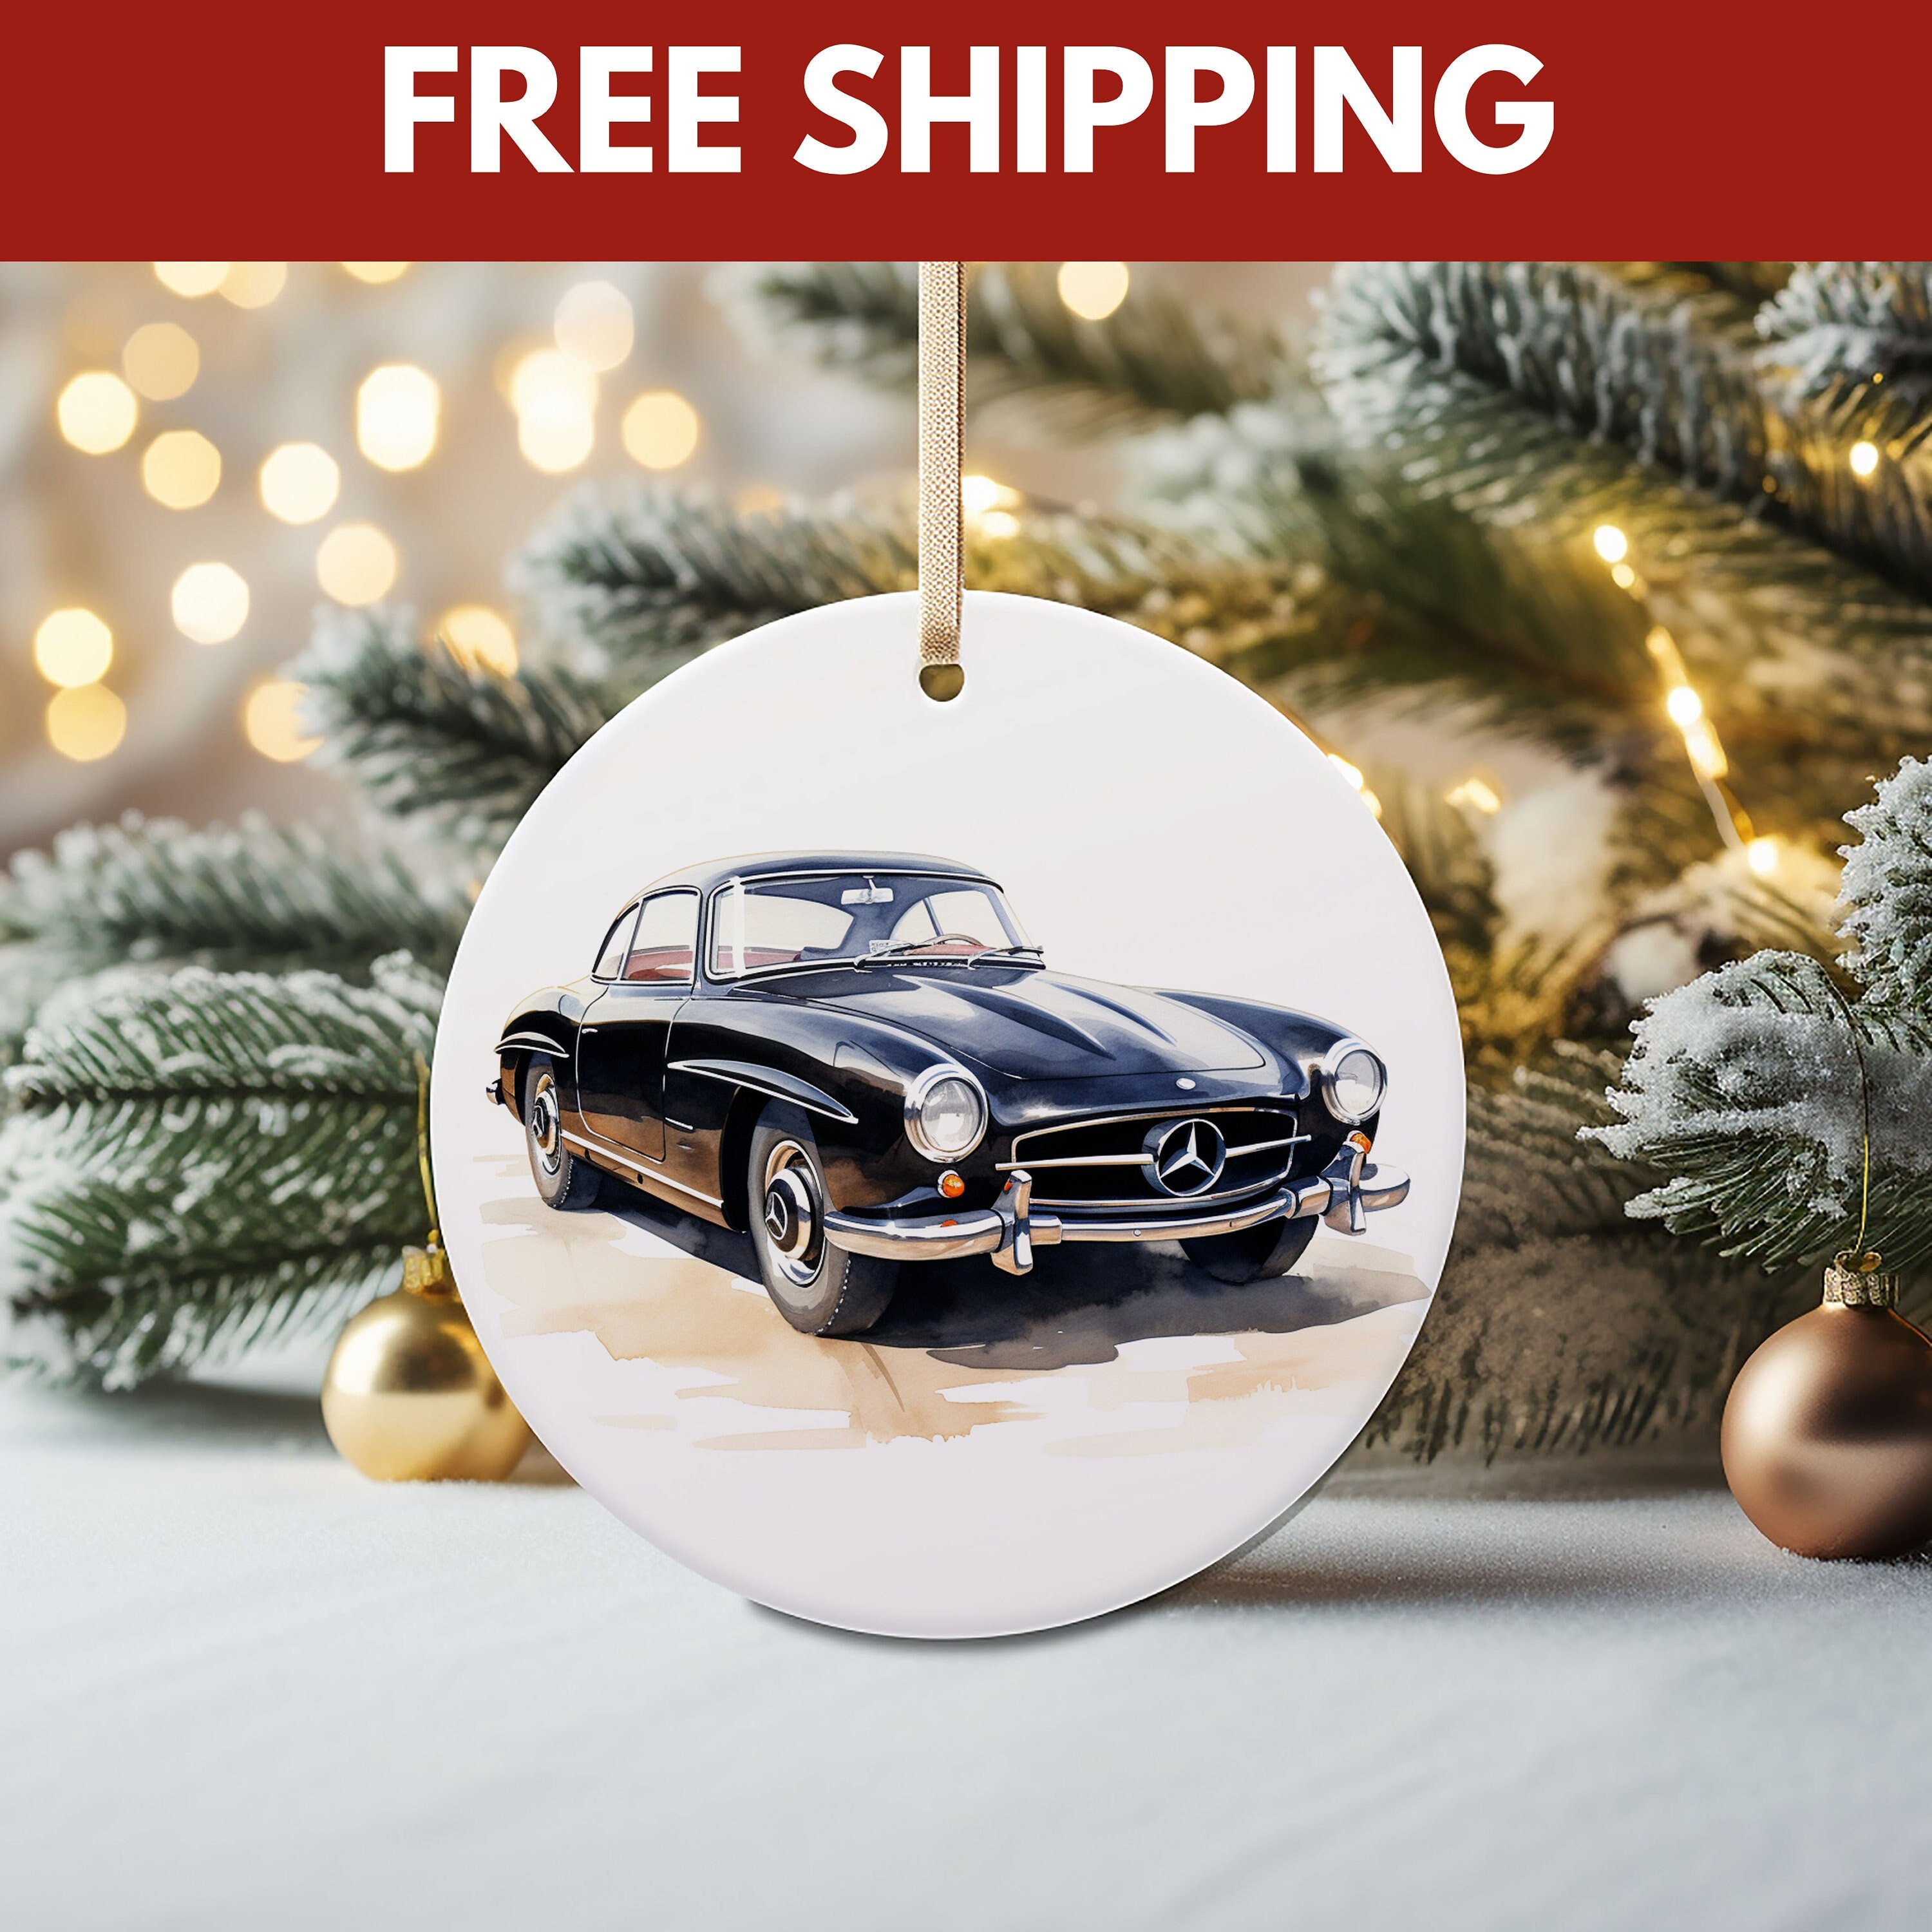 Buy Mercedes Gift Online In India -  India